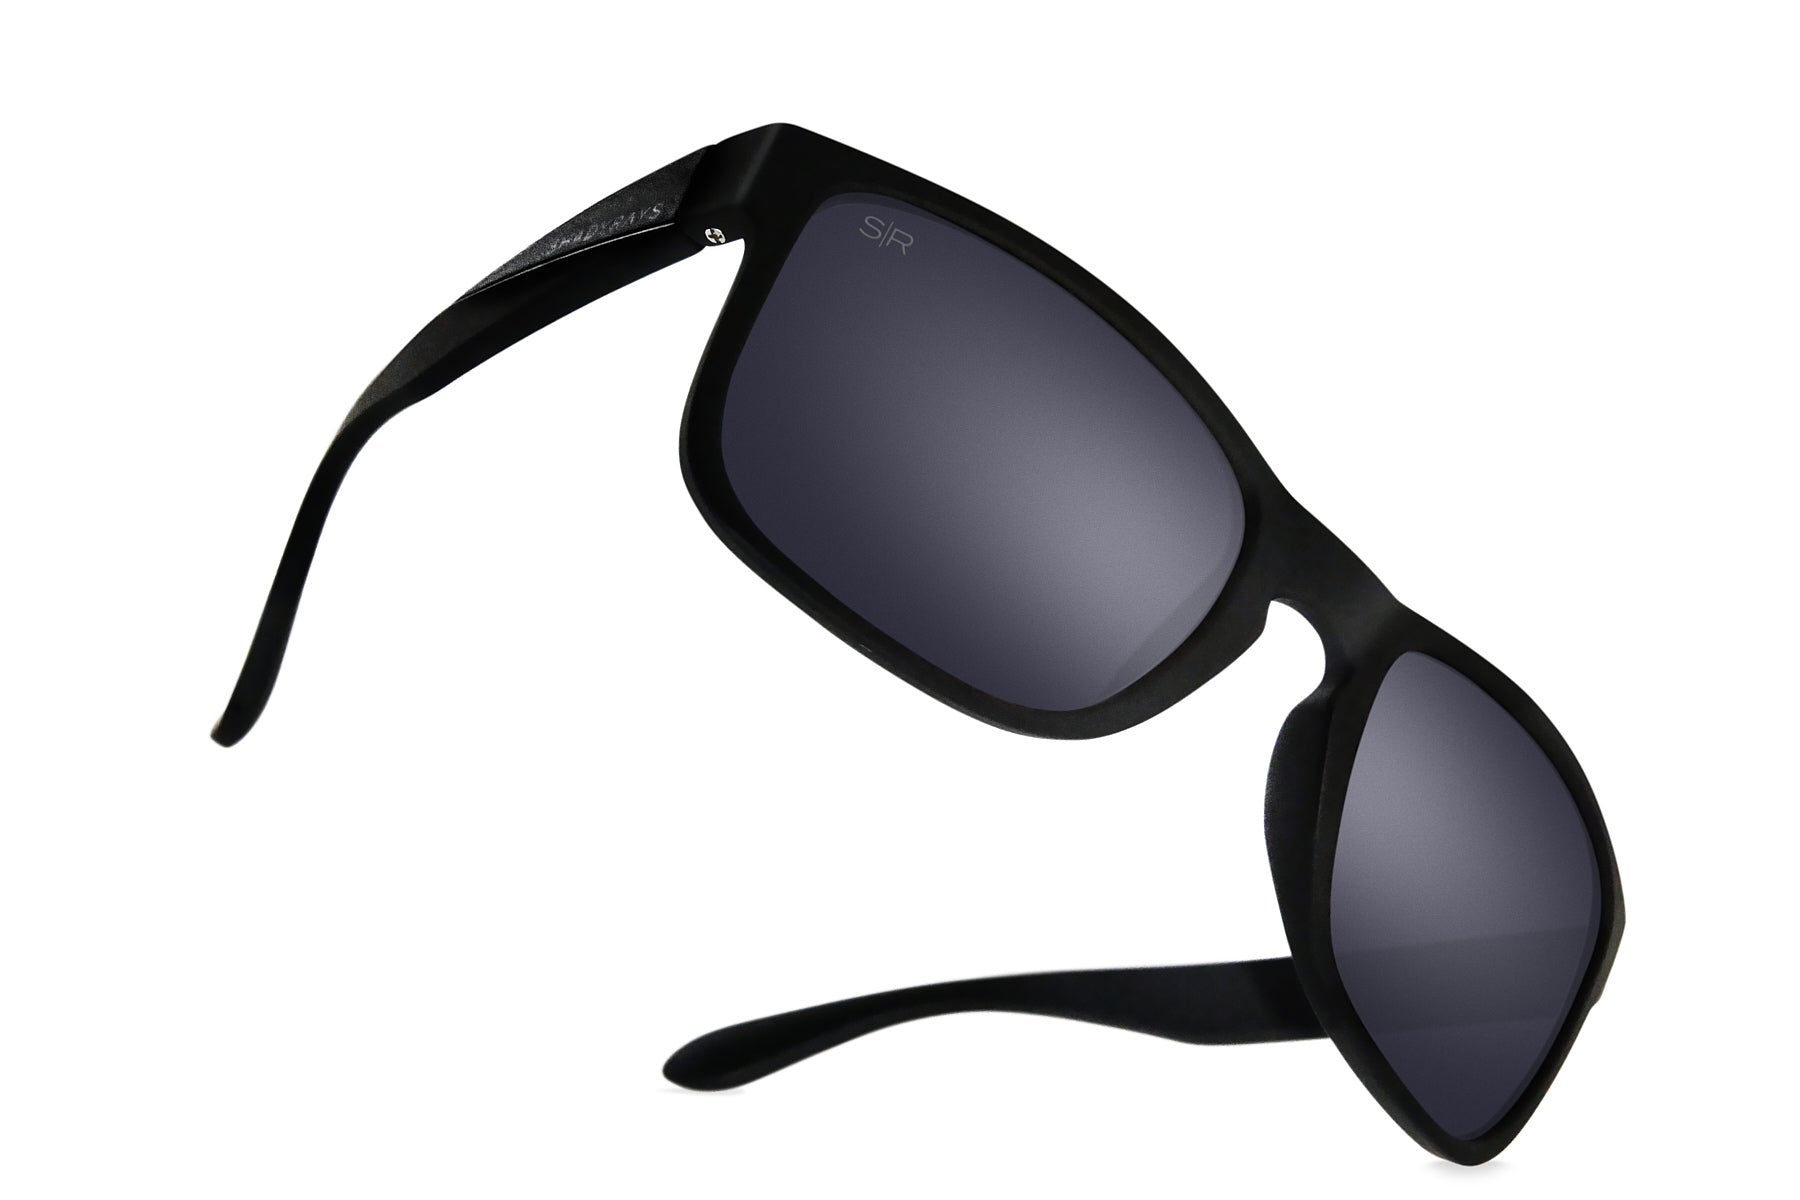 Shady Rays x Series - Black Glacier Polarized Sunglasses Colorush